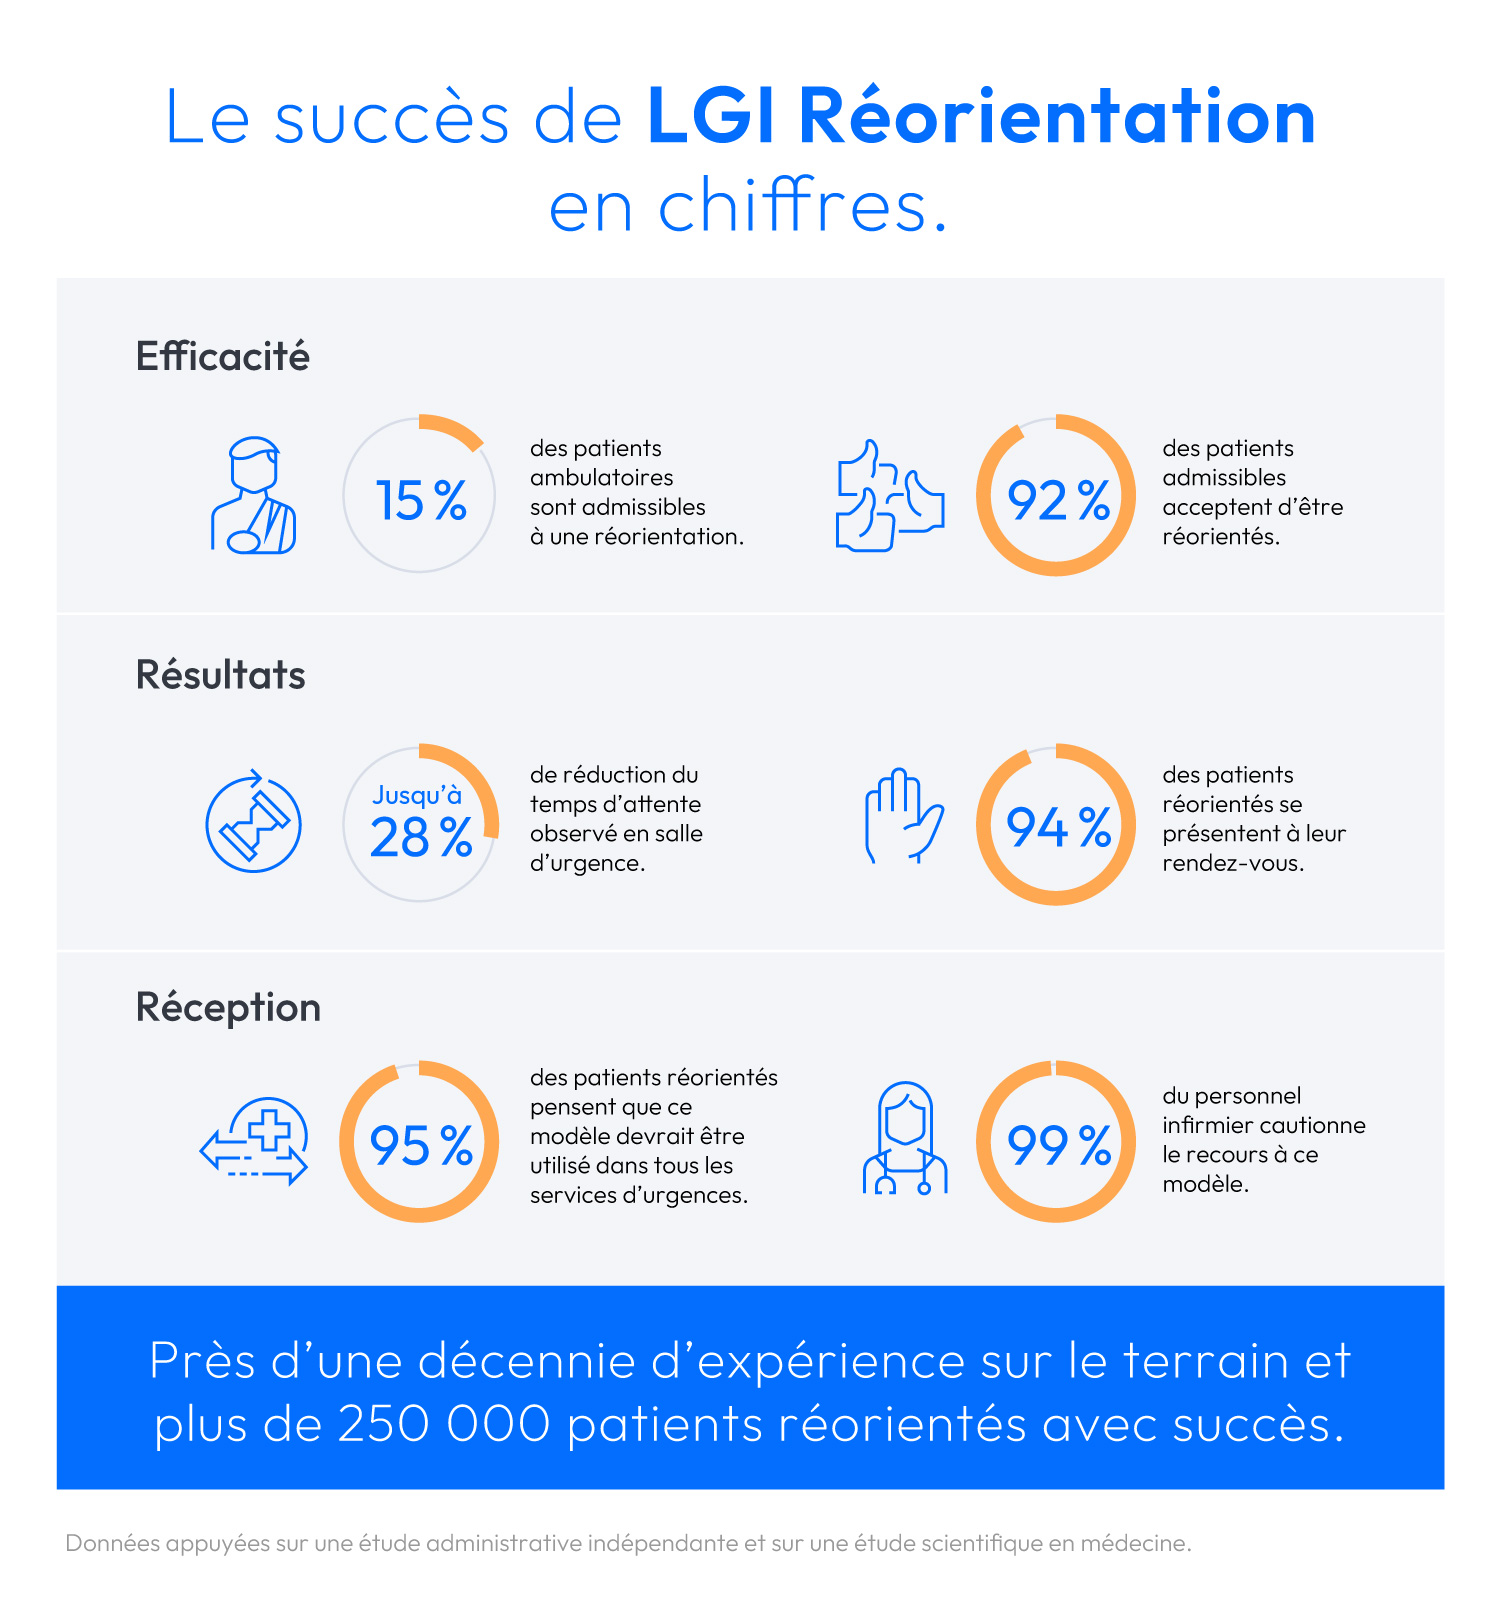 LGI1195-Redirect---Bloc-Article-Infographic-FR